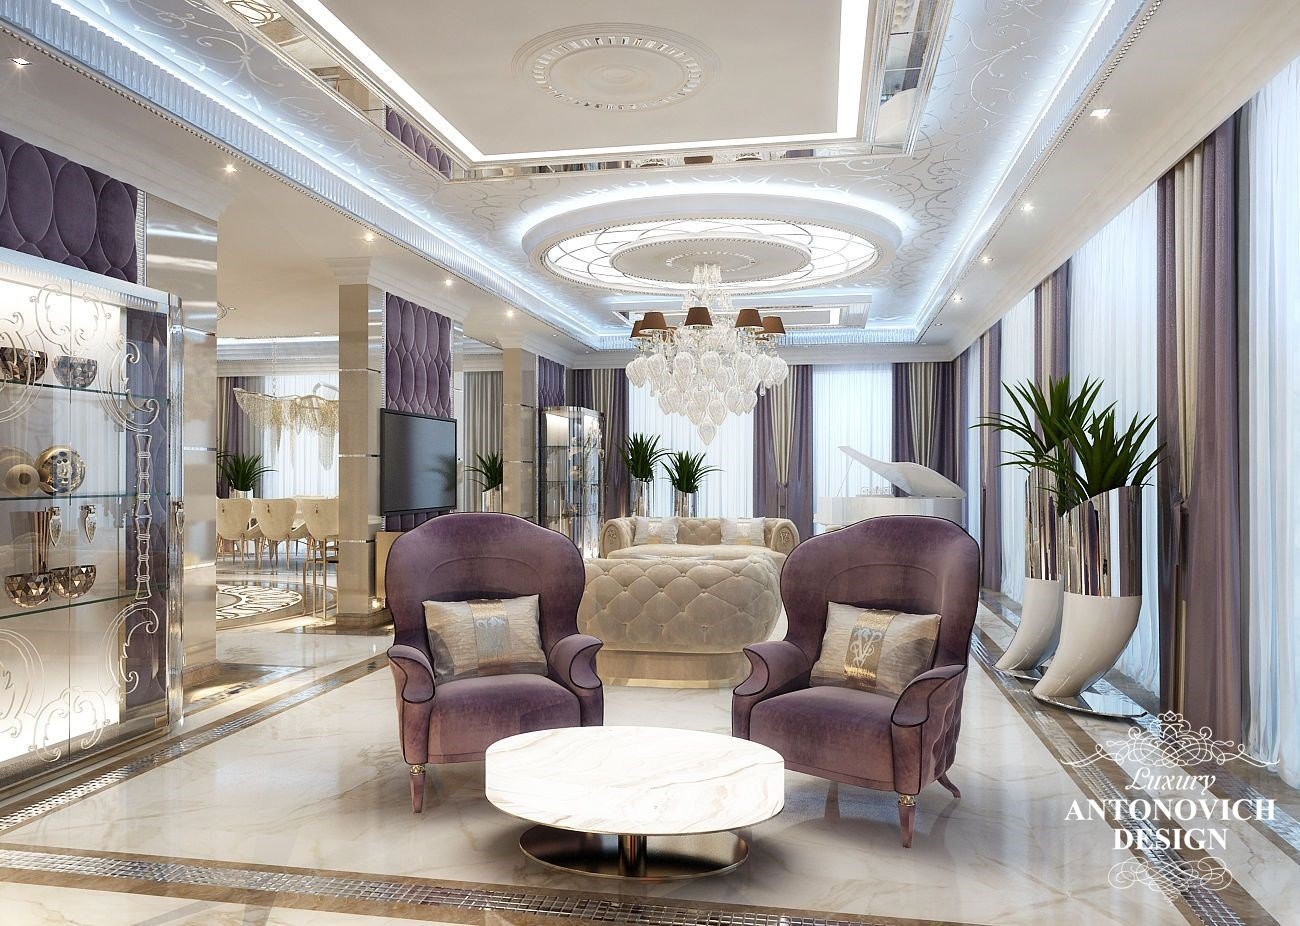 Luxury-Antonovich-Design-gostinnaya-11